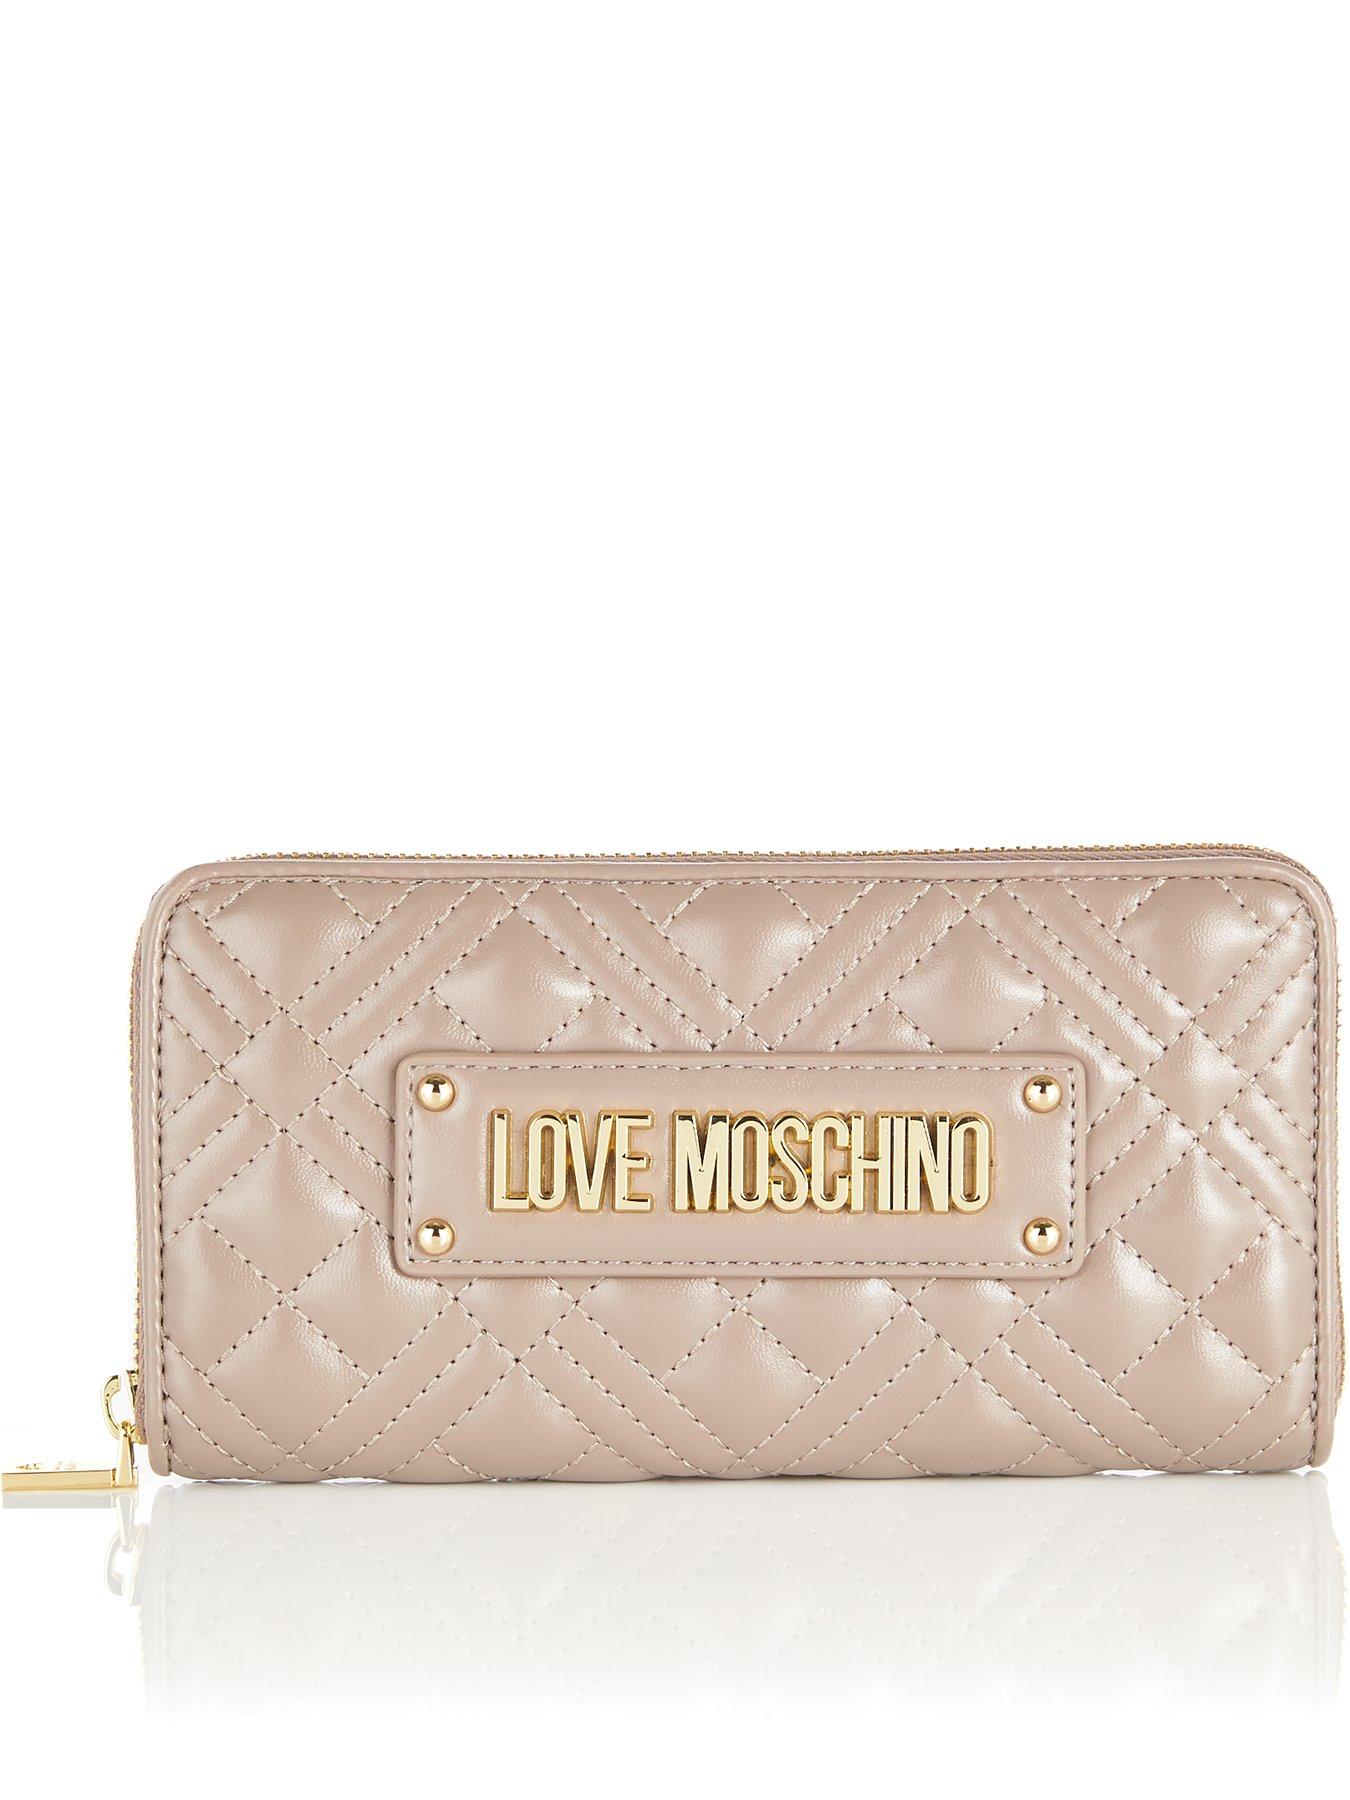 moschino purse pink